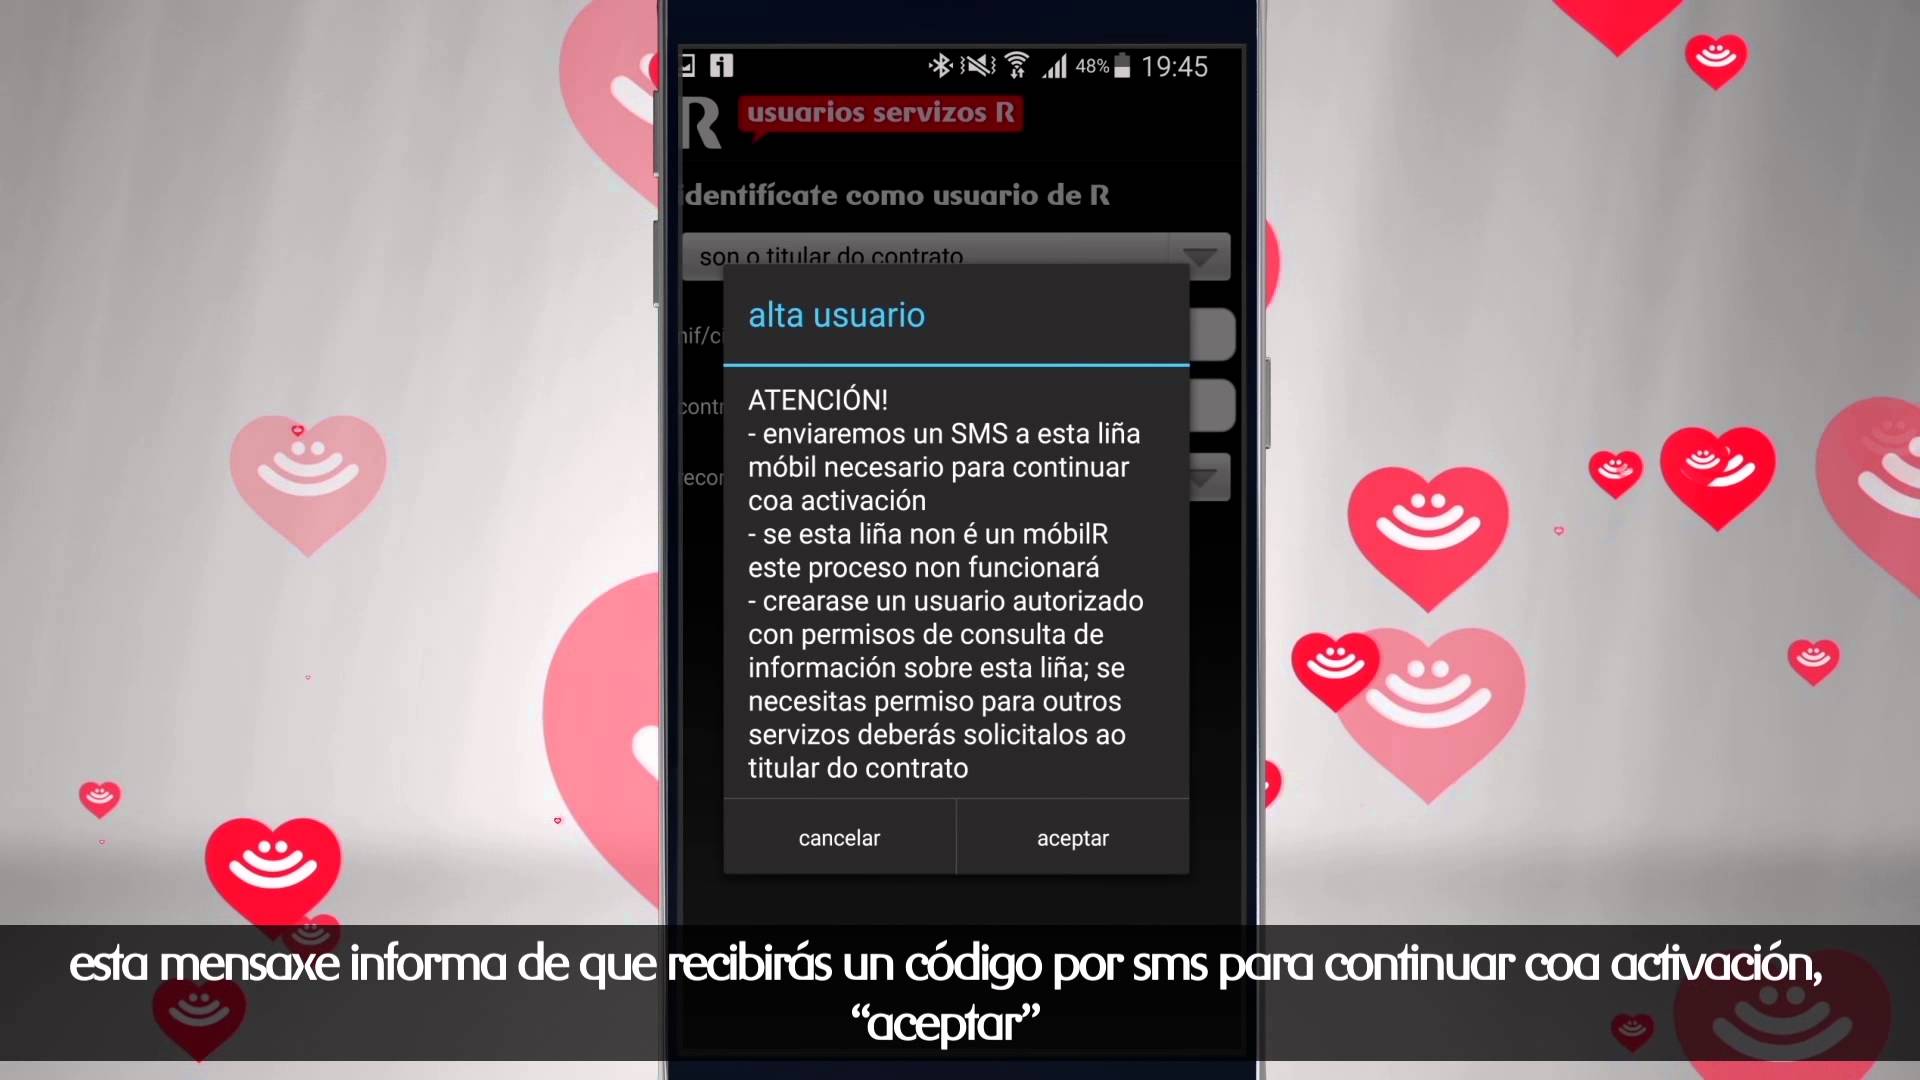 wificlientesR,R Galicia,Android,móbilR